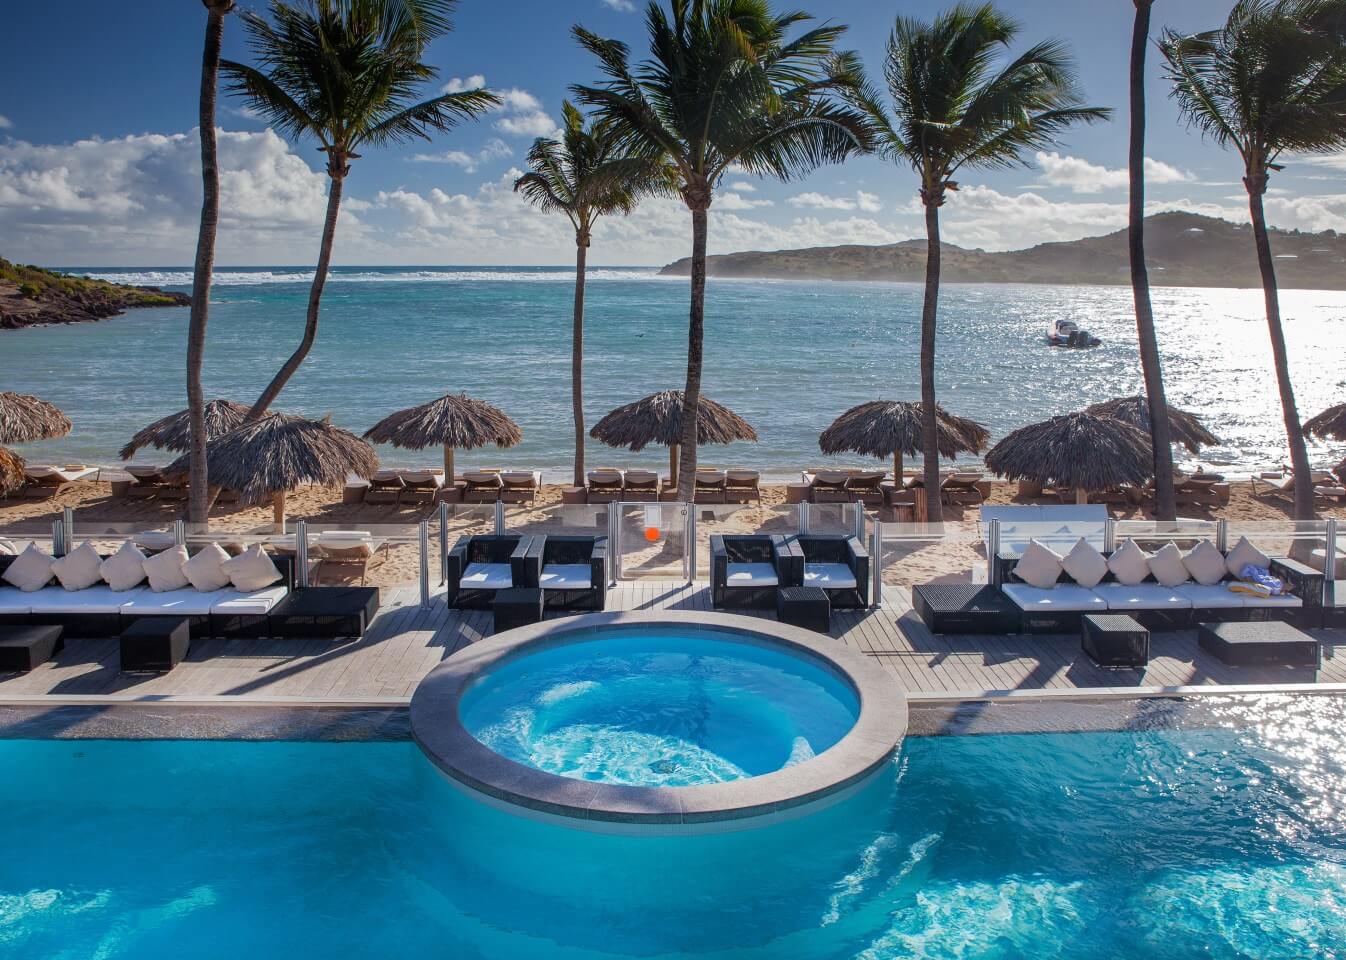 Hotel Guanahani & Spa, St. Barts: caribbean island resorts